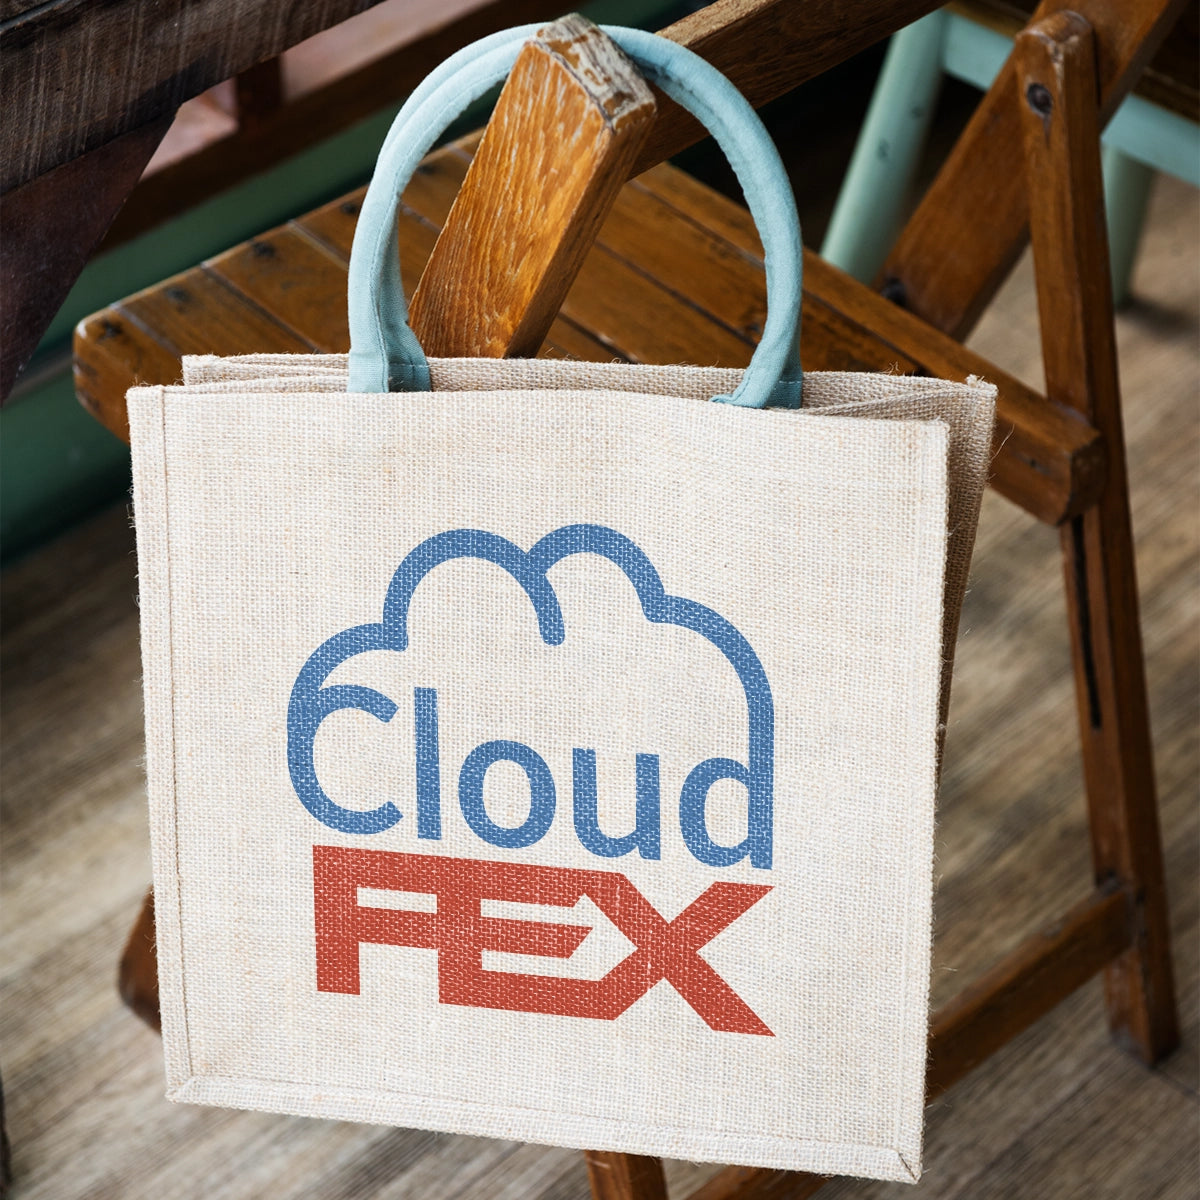 cloudfex.com